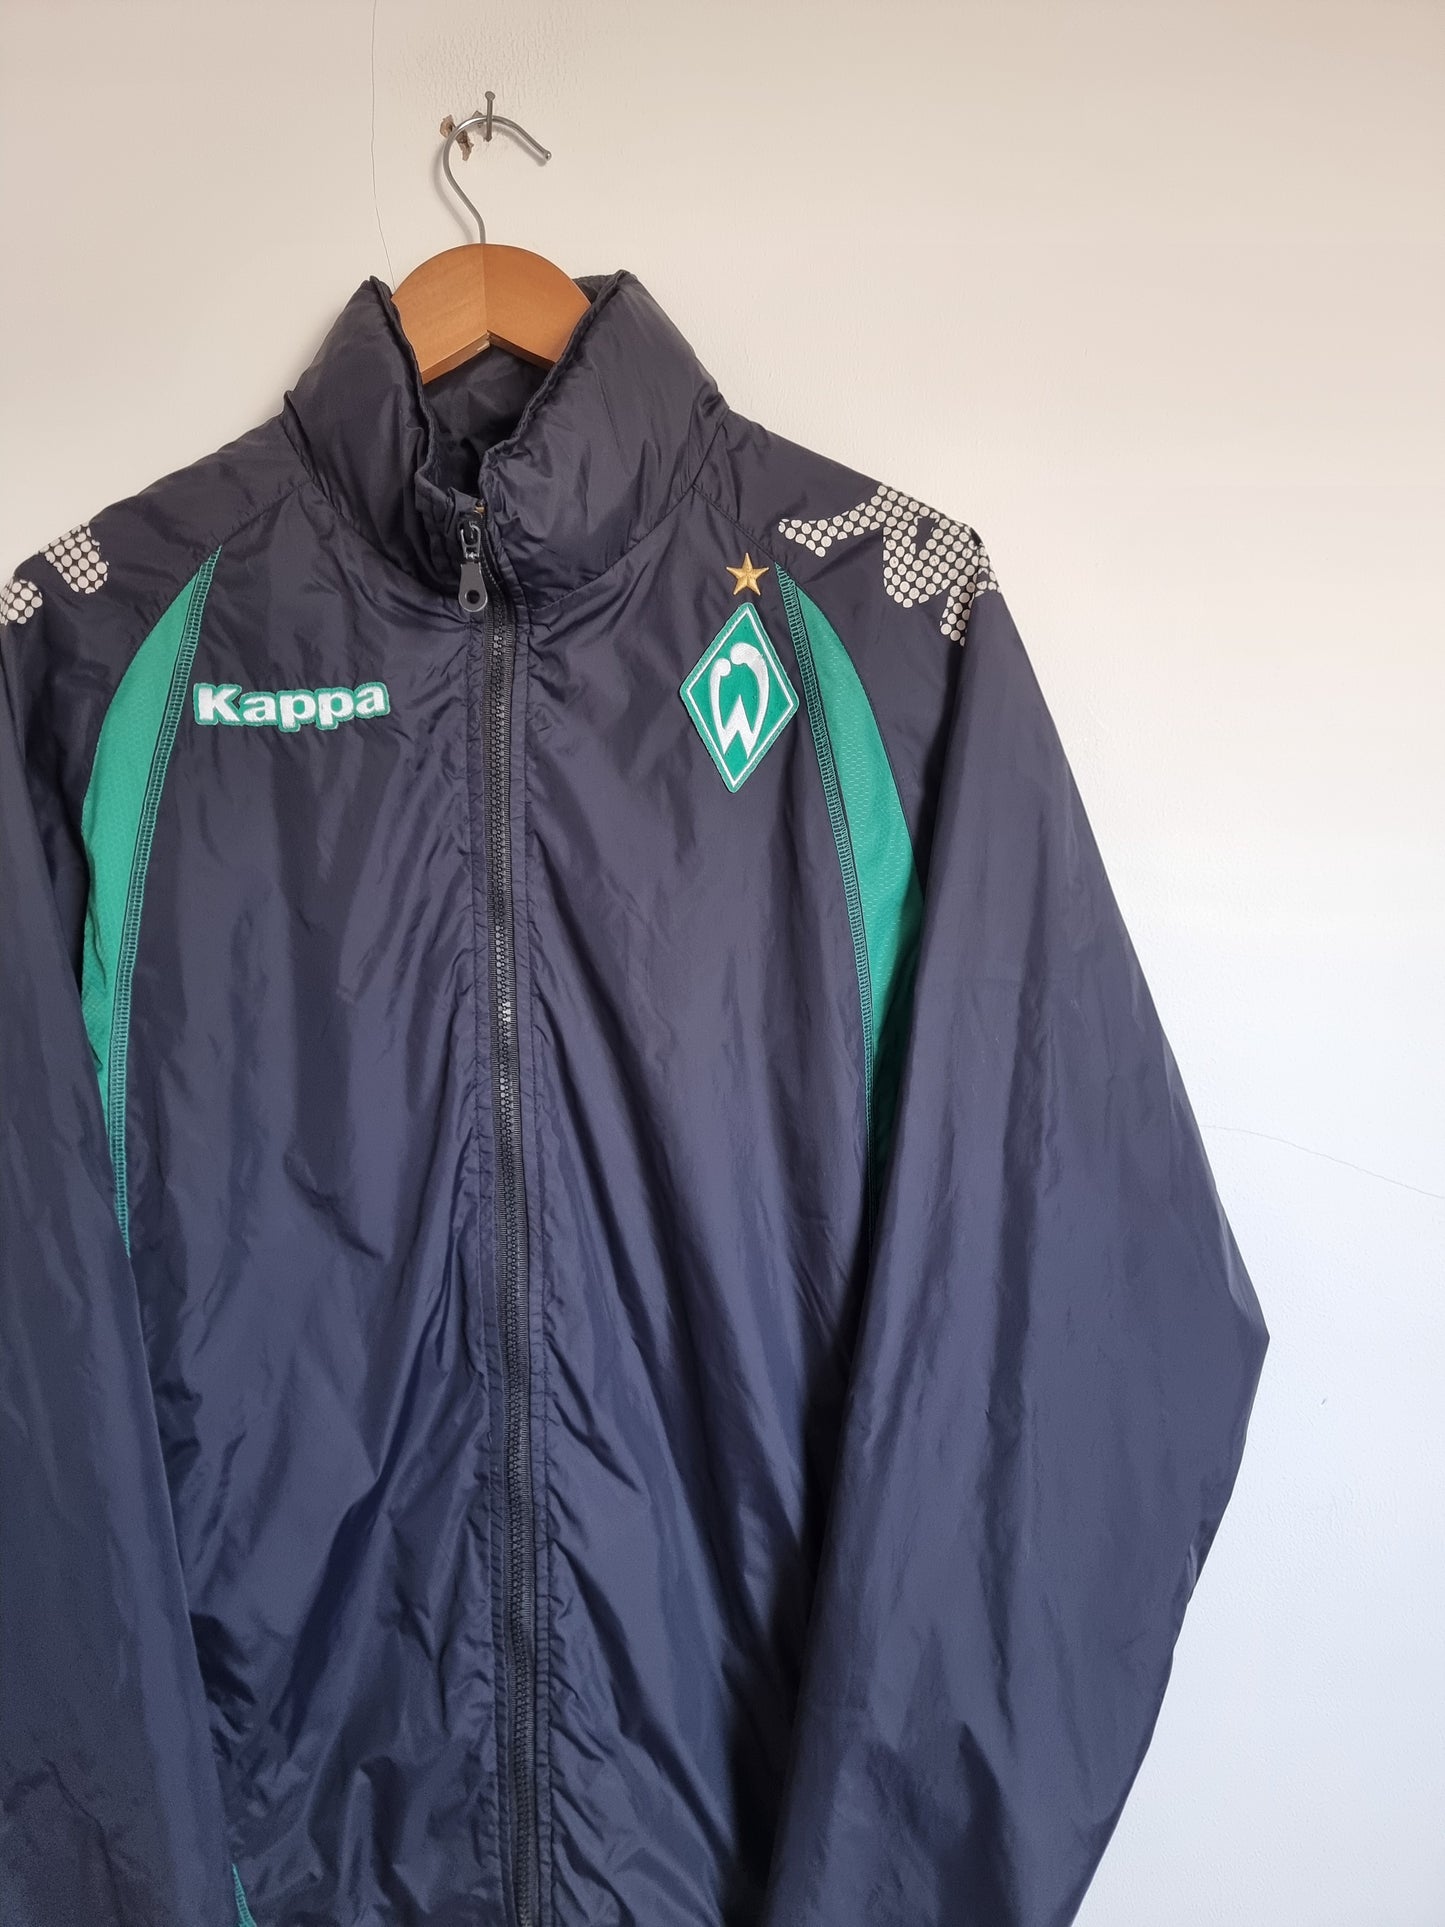 Kappa Werder Bremen 08/09 Windbreaker Training Jacket Medium